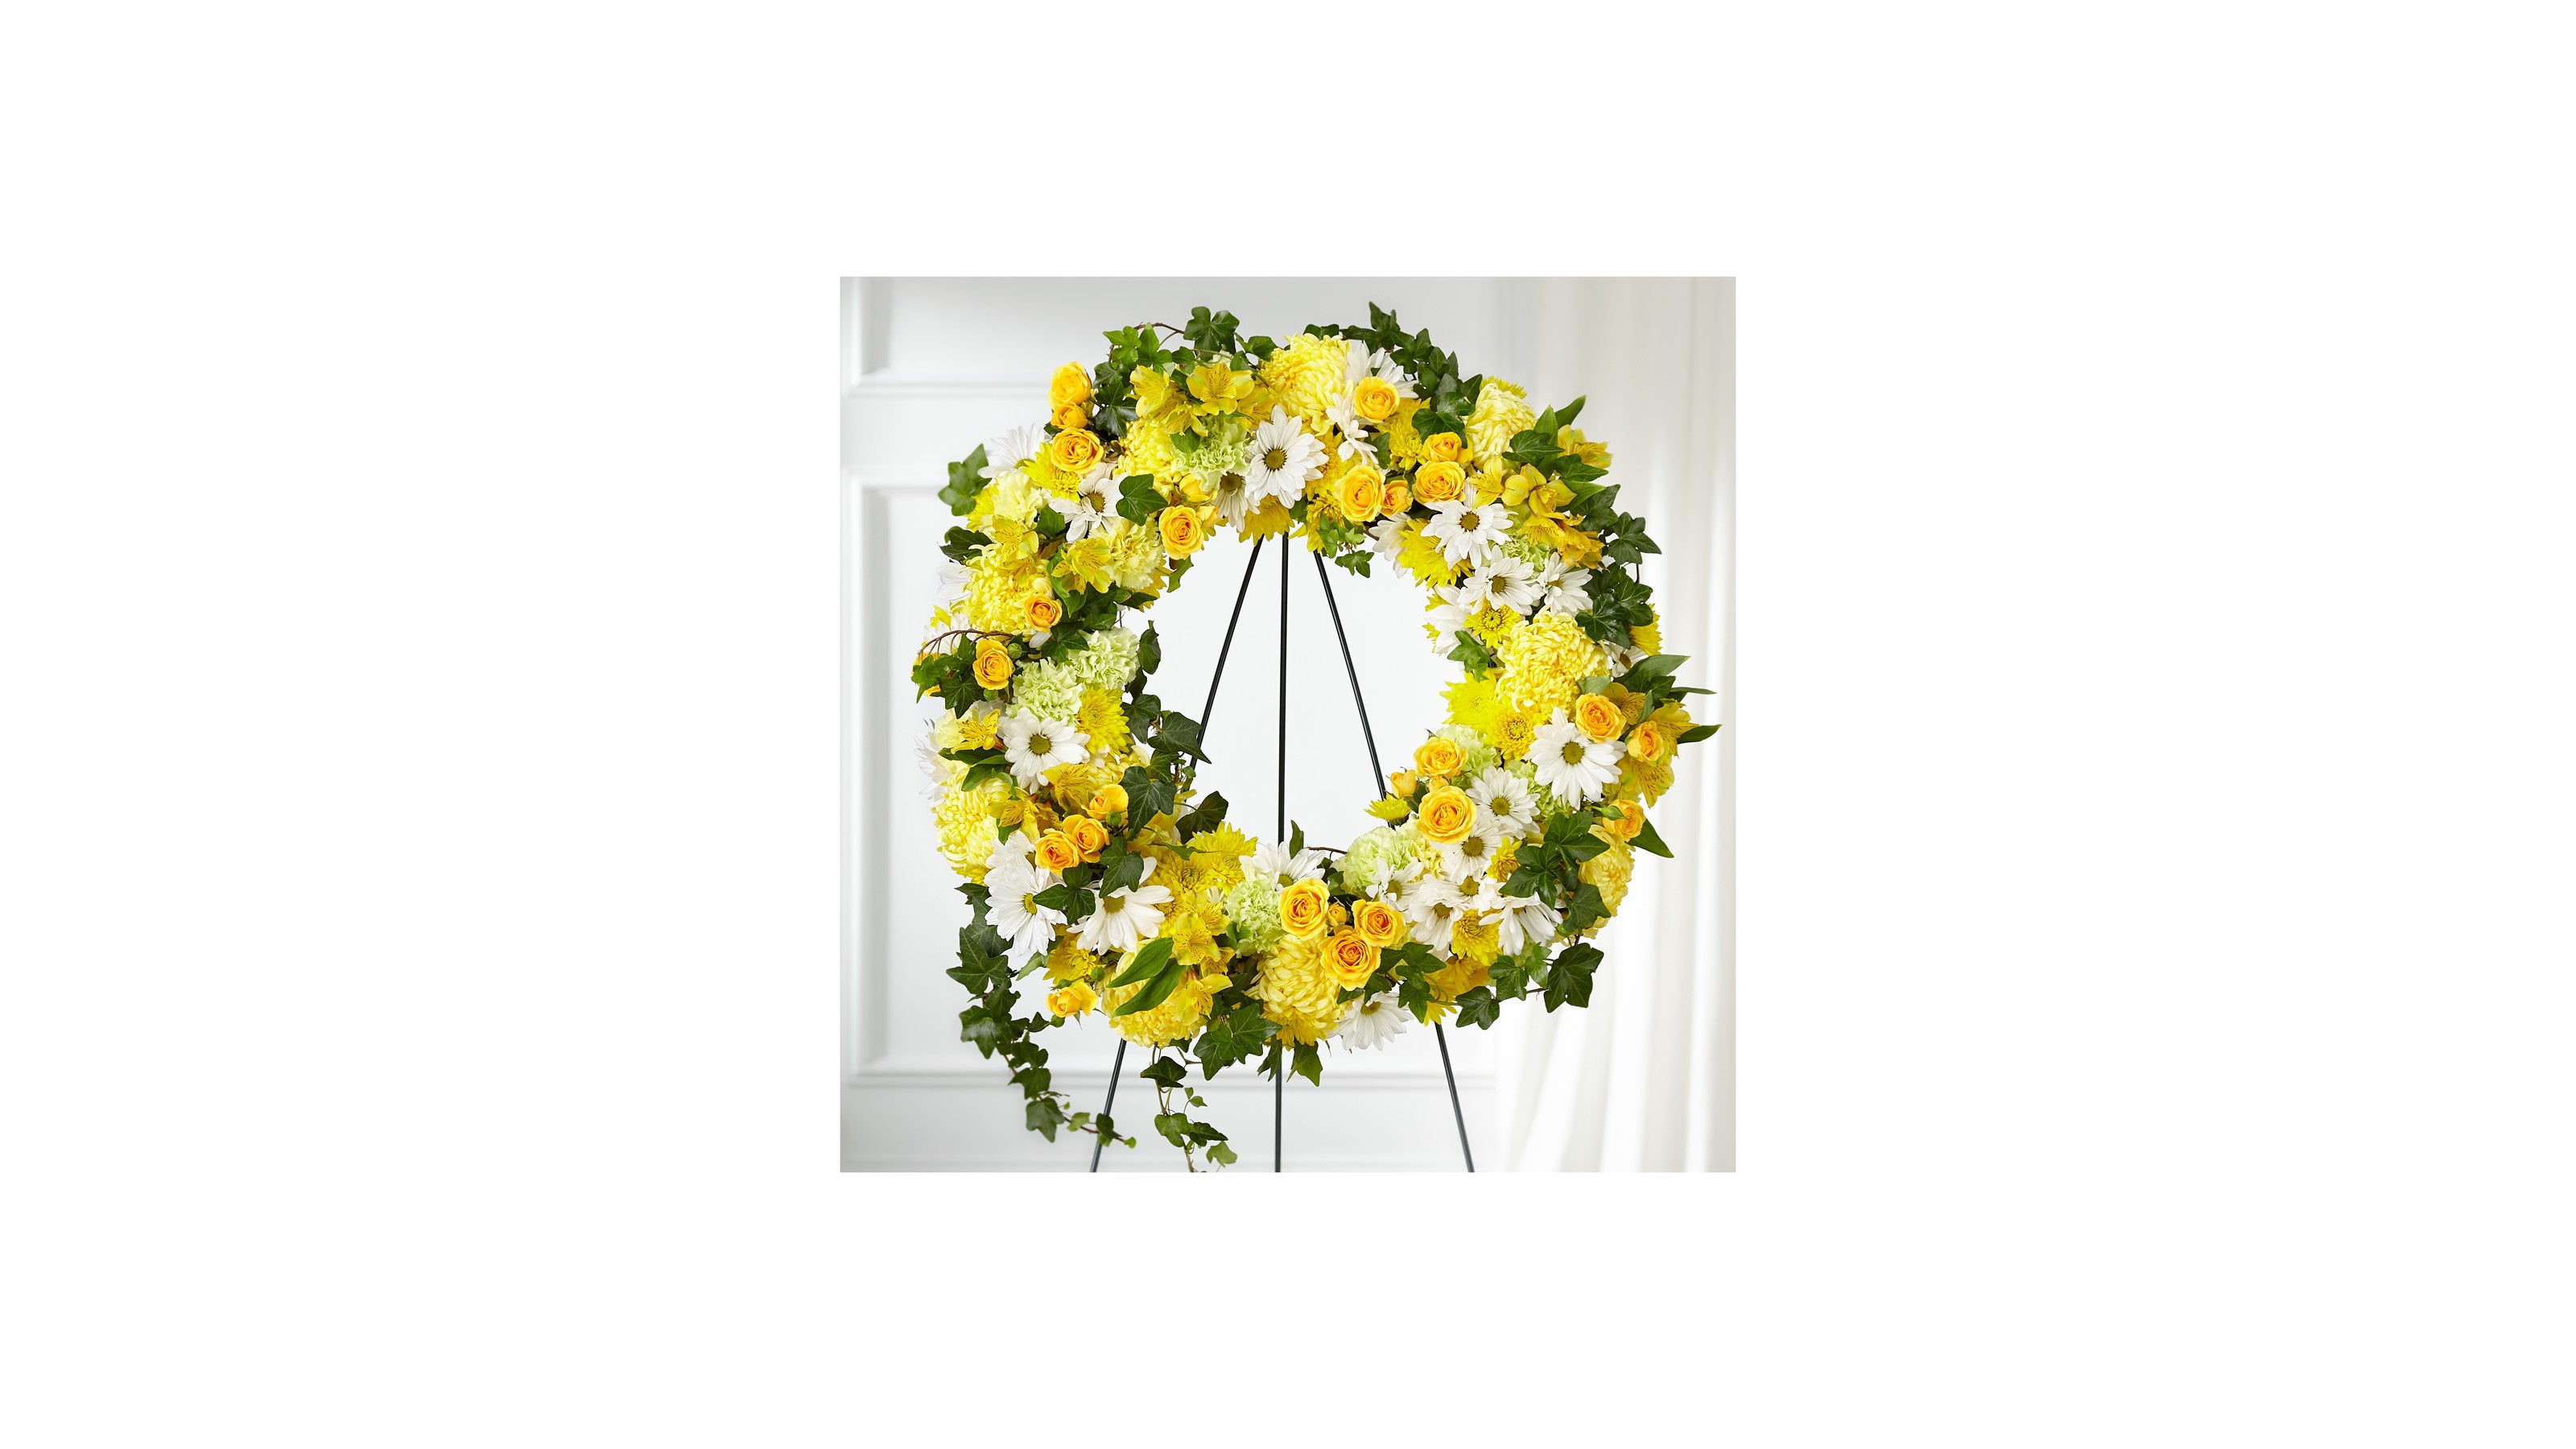 Funeral Flowers Delivered: Funeral Arrangements